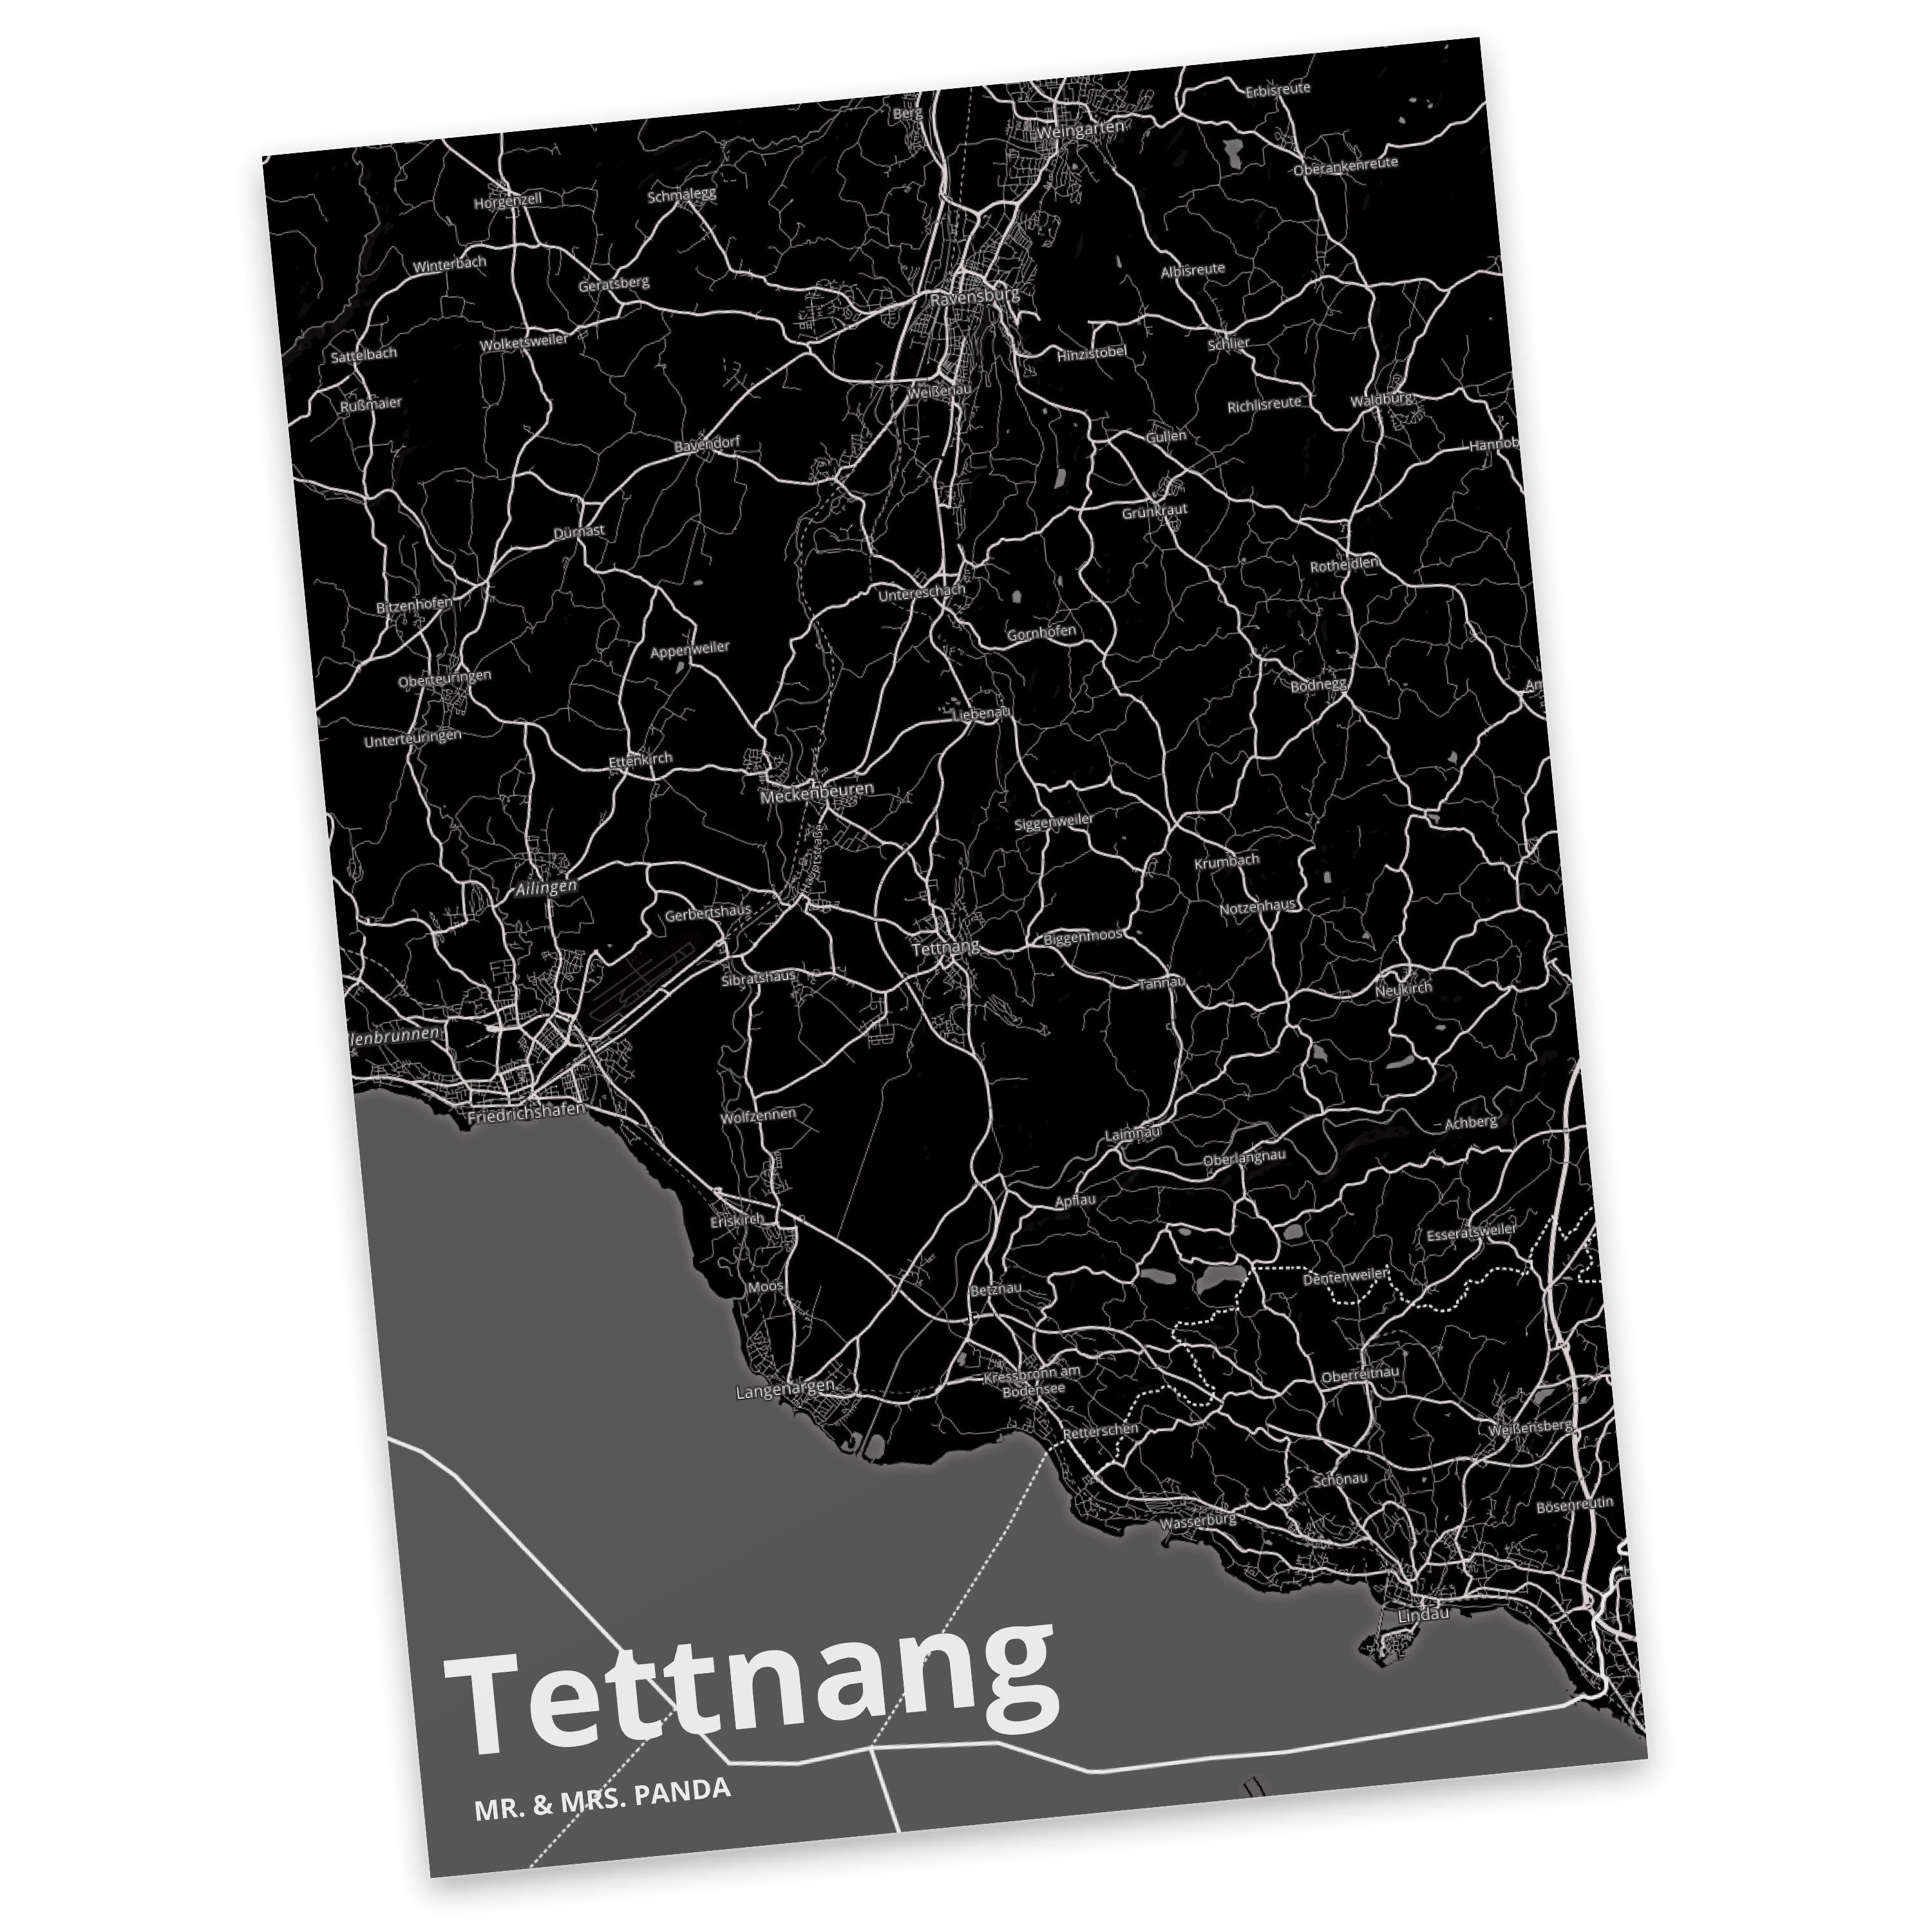 Mr. & Mrs. Panda Postkarte Tettnang - Geschenk, Städte, Einladung, Stadt Dorf Karte Landkarte Ma